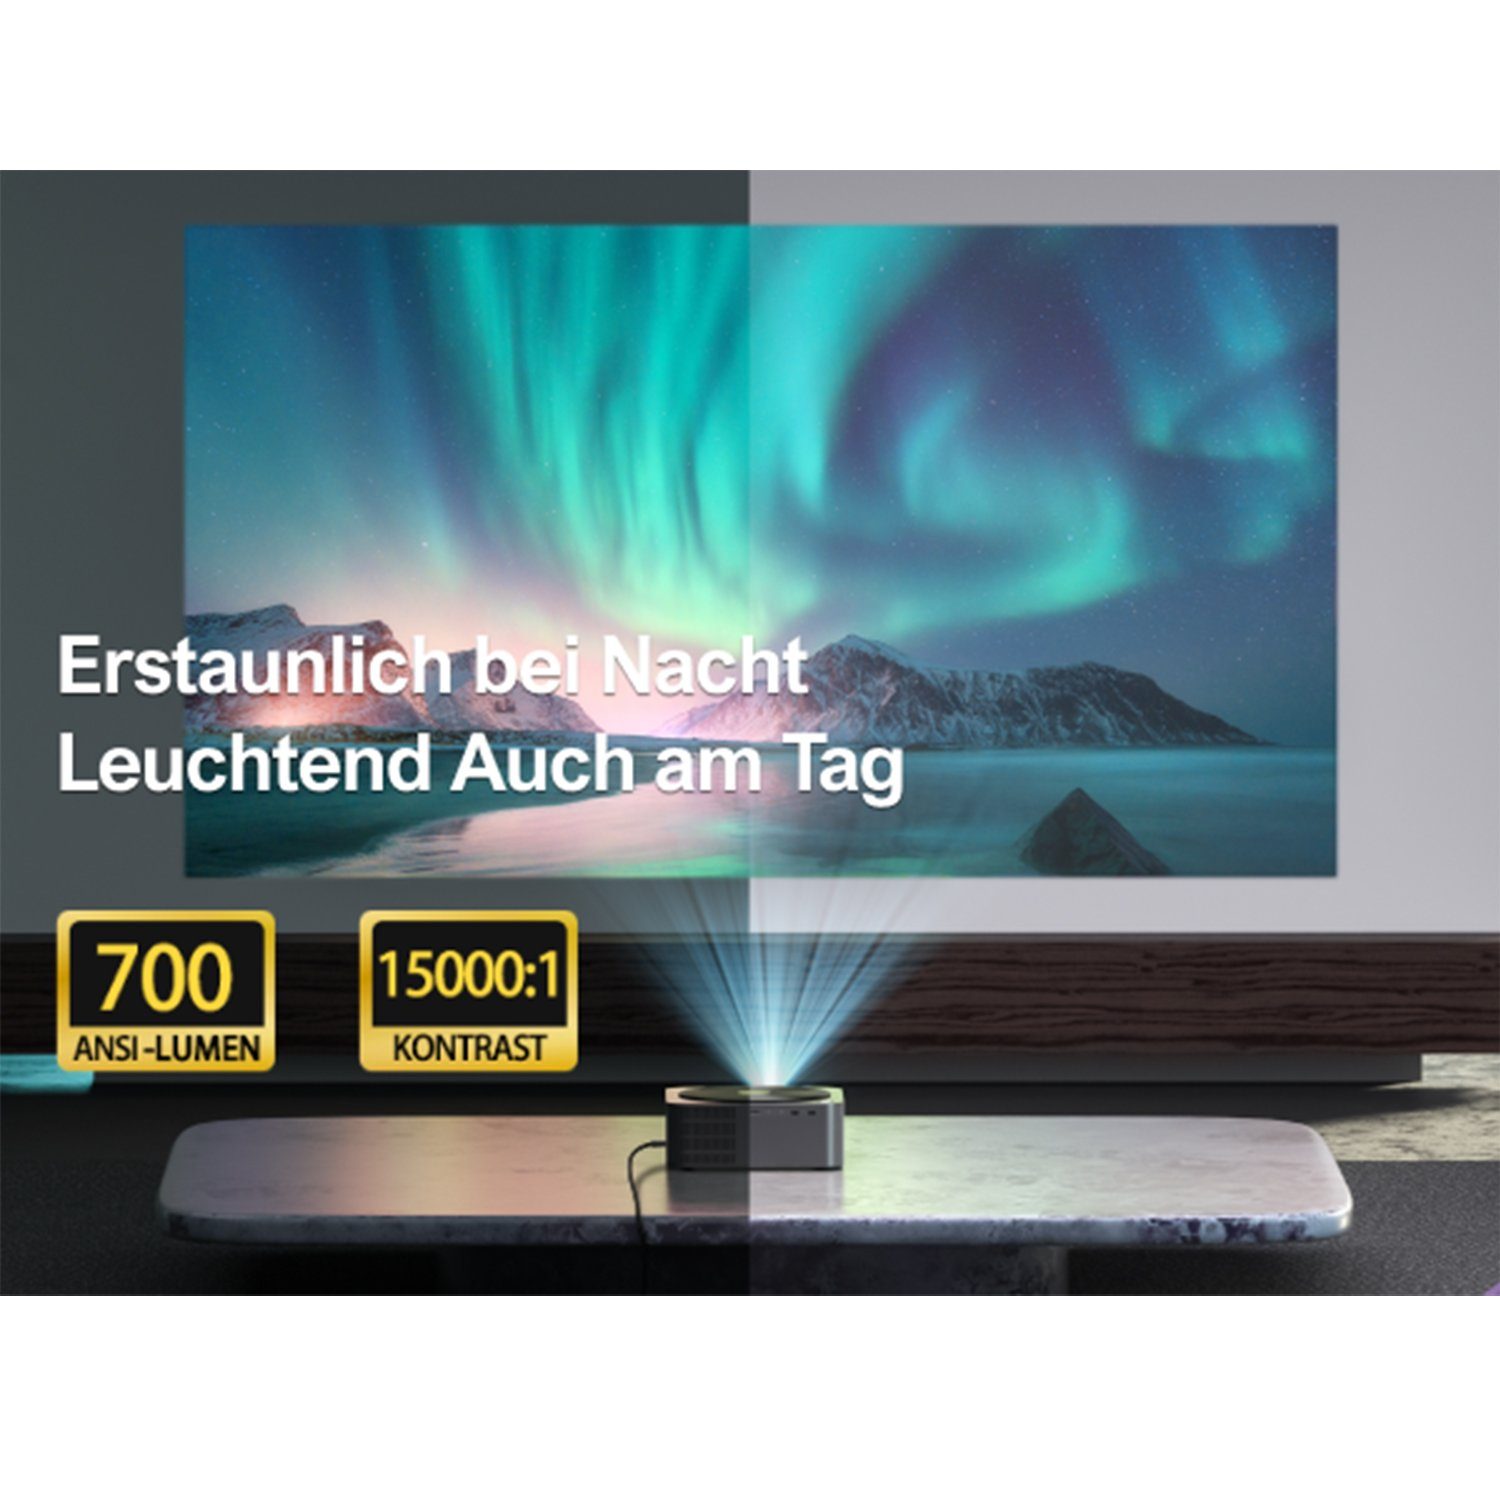 HD Full schwarz Full 1080P 15000:1, Ultimea Autofokus&6D-Autotrapezkorrektur) (21000 1920 px, Native lm, x 1080 HD,4K-Decodierung&HDR10, Beamer